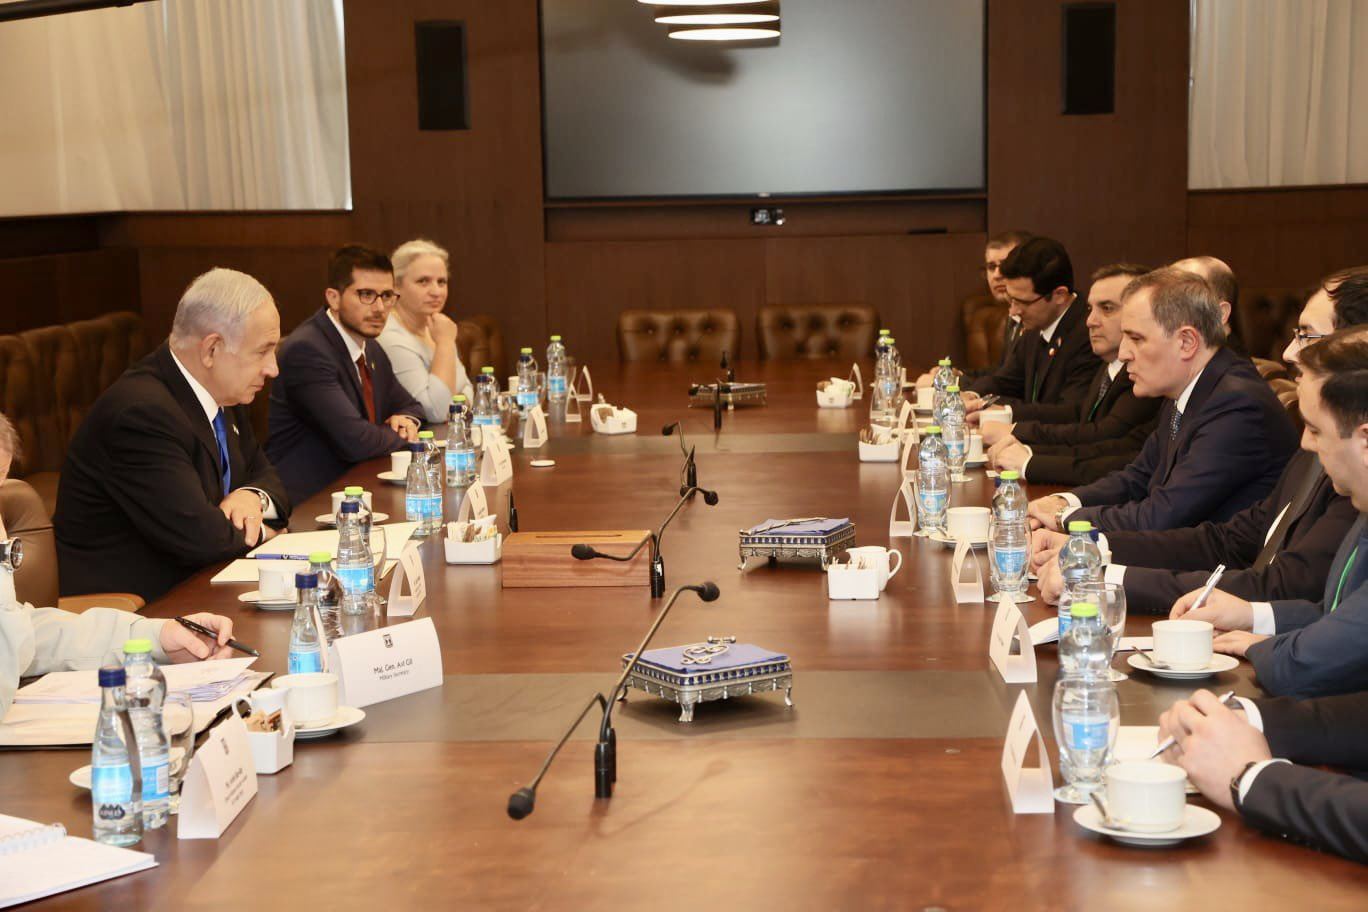 Azerbaijani FM meets PM of Israel (PHOTO)